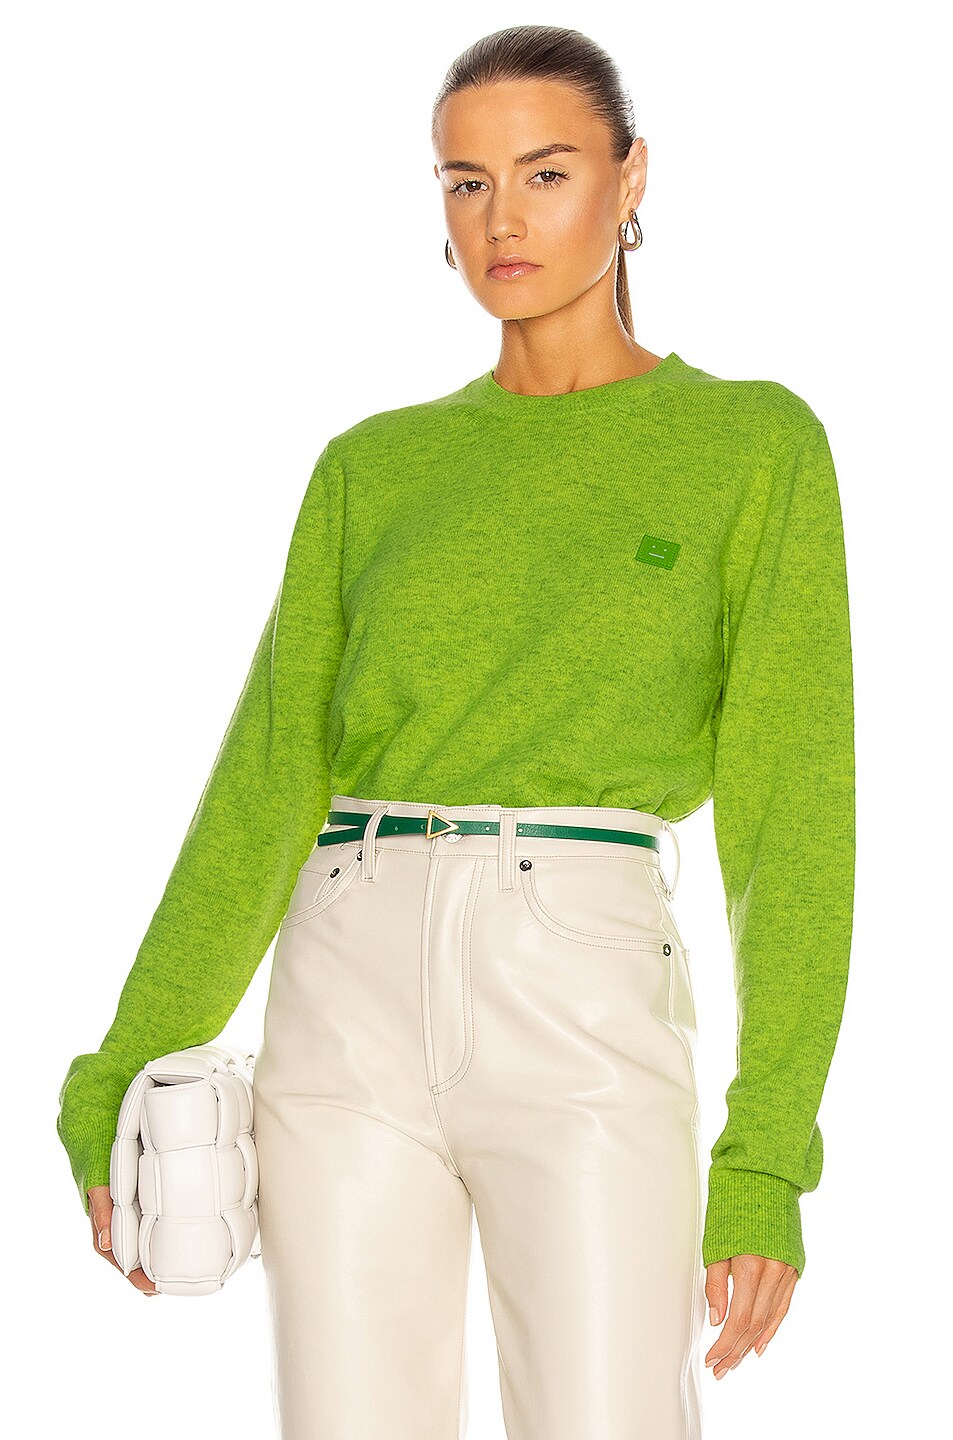 Acne Studios Kalon Face Sweater in Neon Green | FWRD